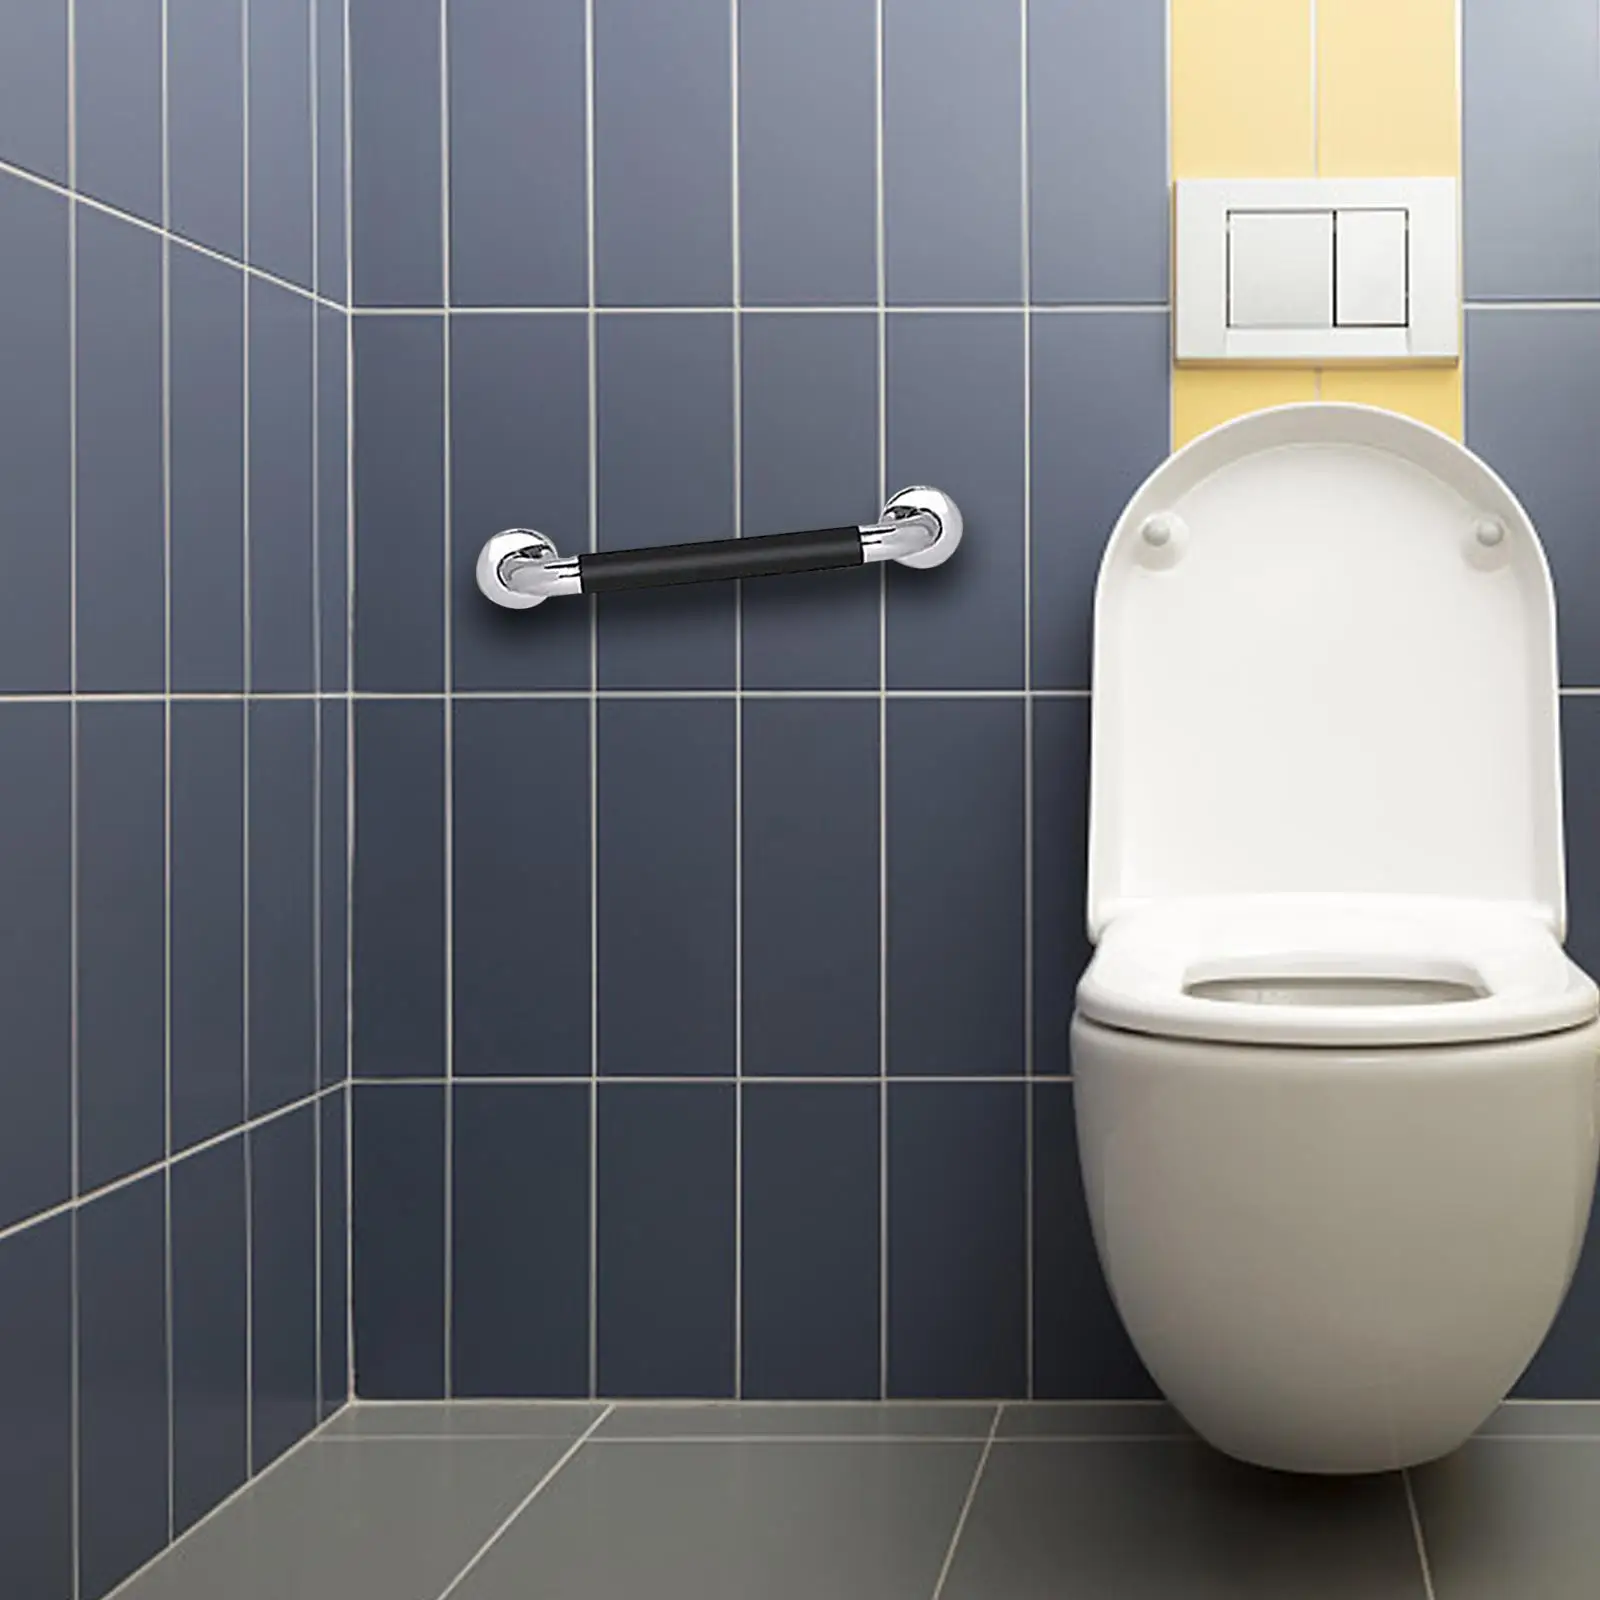 Bathroom Grab Bar Safety Hand Rail Support Anti Slip Shower Grab Bar 25inch